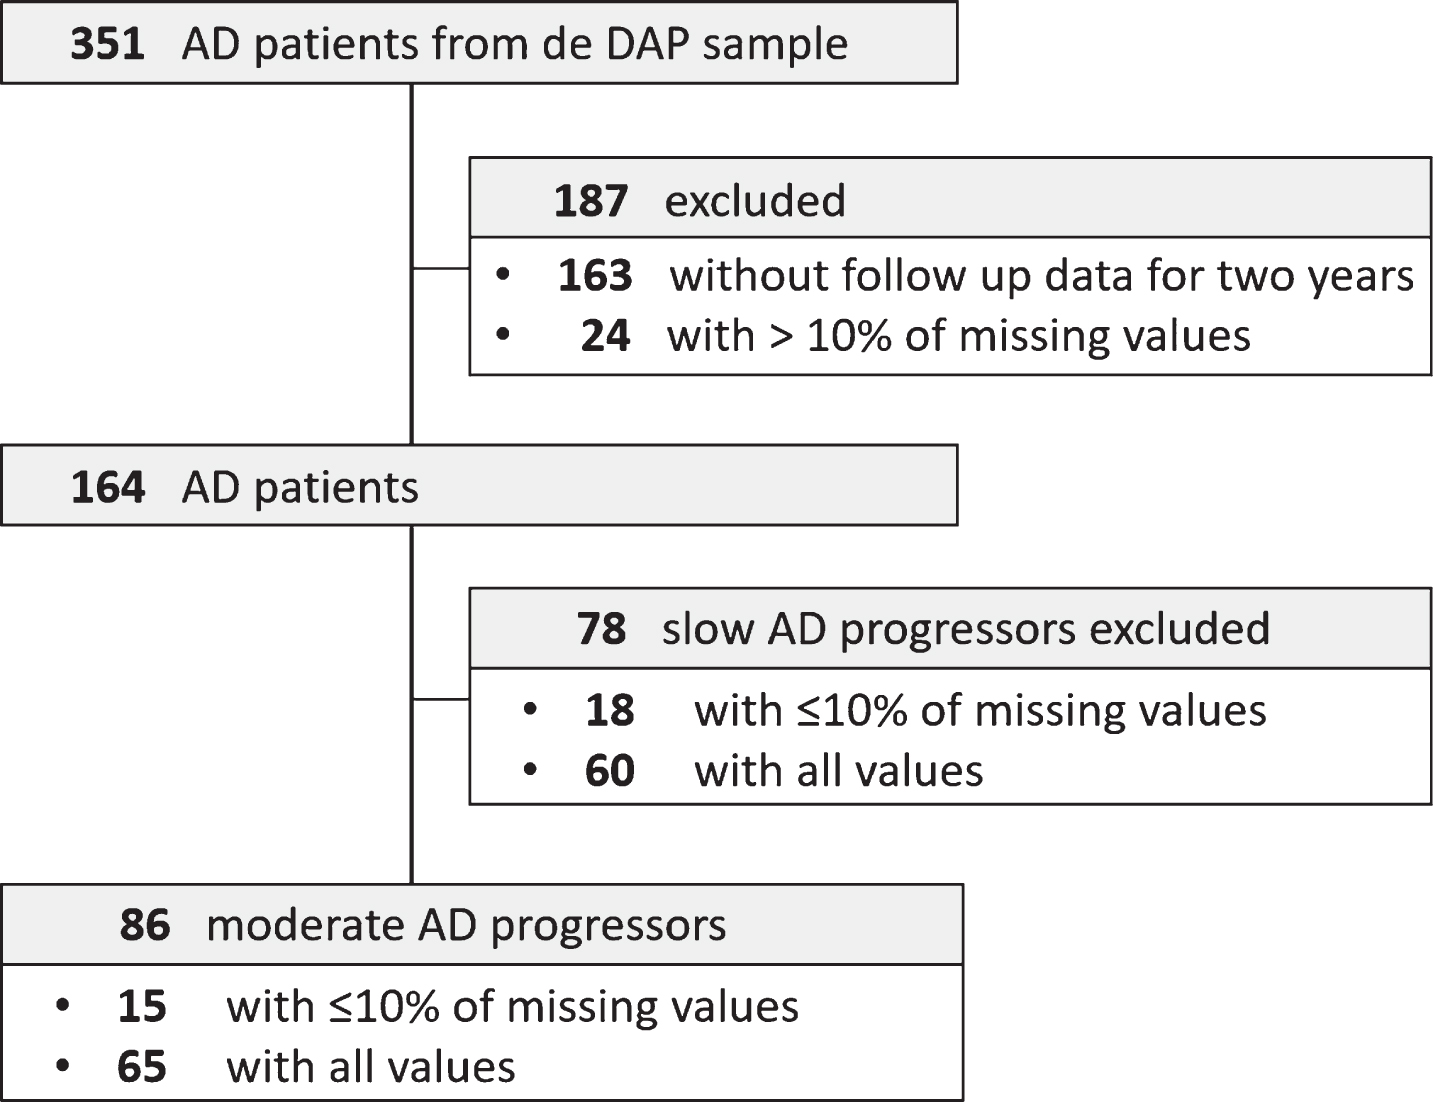 Study flow of dementia patients of the DAP study population. AD, Alzheimer’s disease dementia; DAP, Diagnostic and prognostic study.